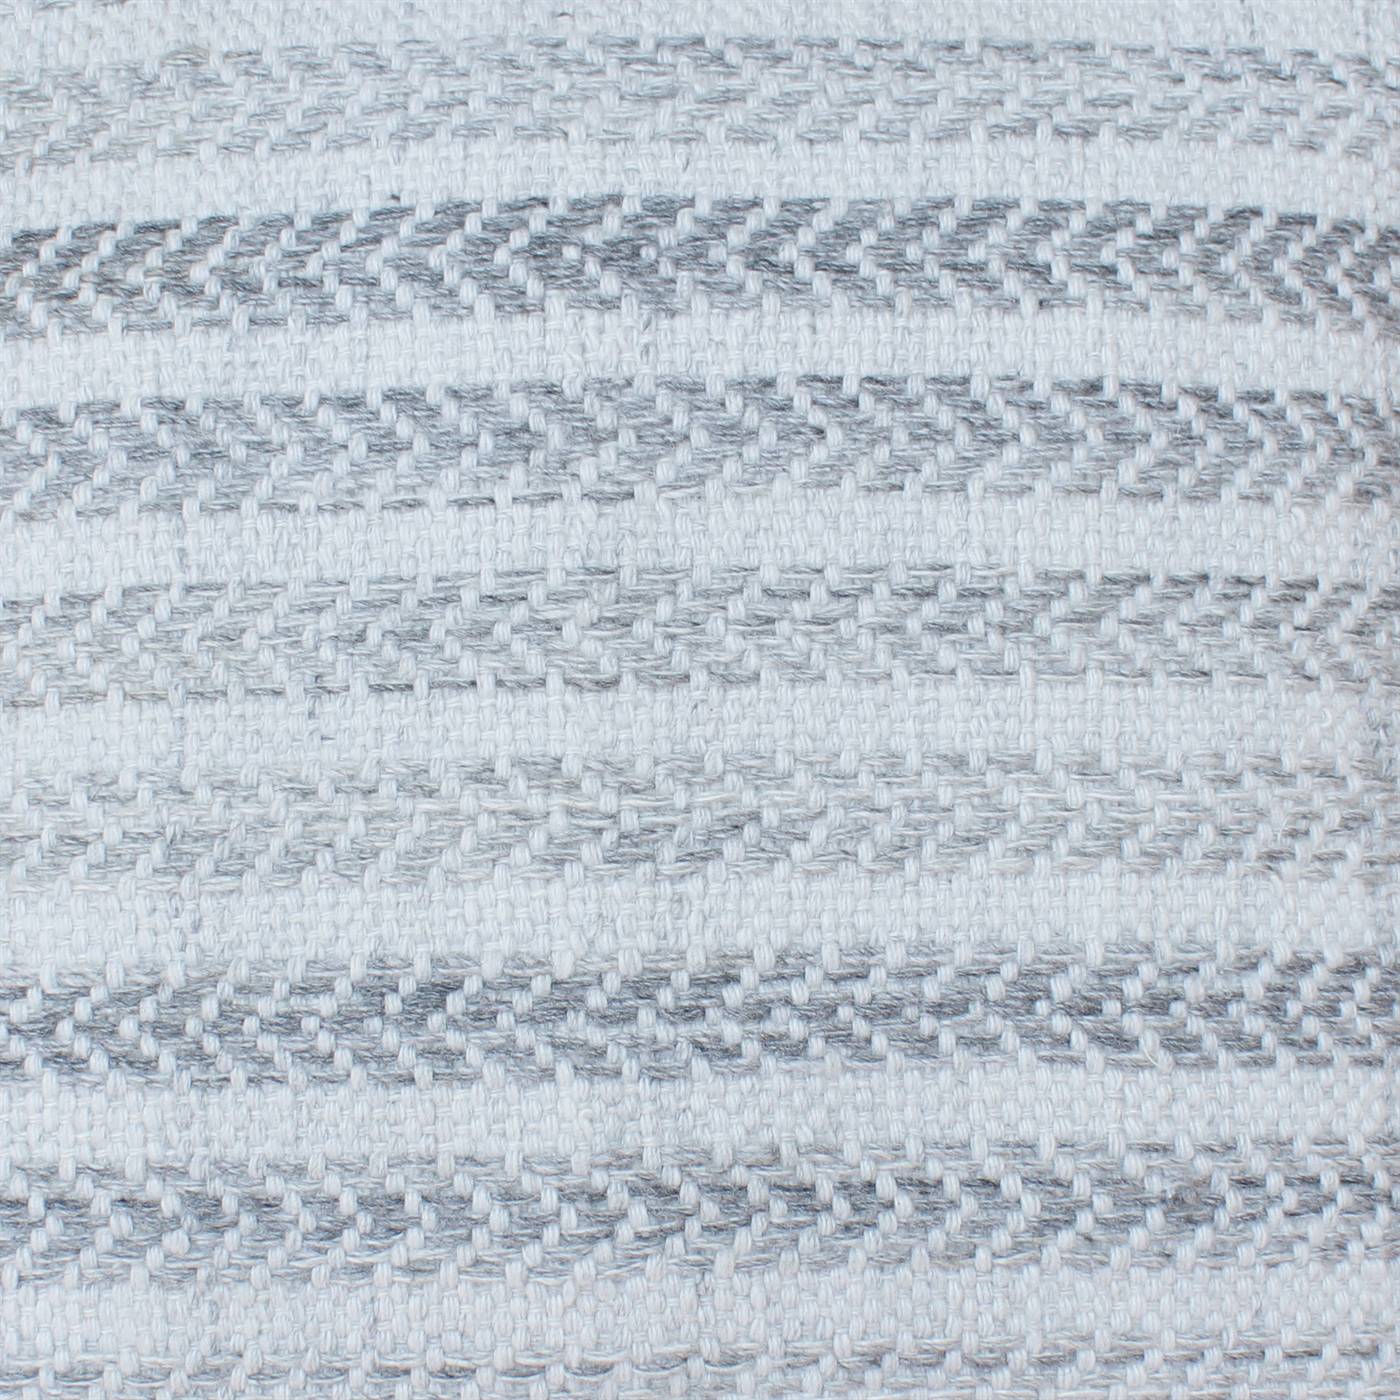 Campina Cushion, 56x56 cm, Grey, PET, Hand Woven, Pitloom, Flat Weave